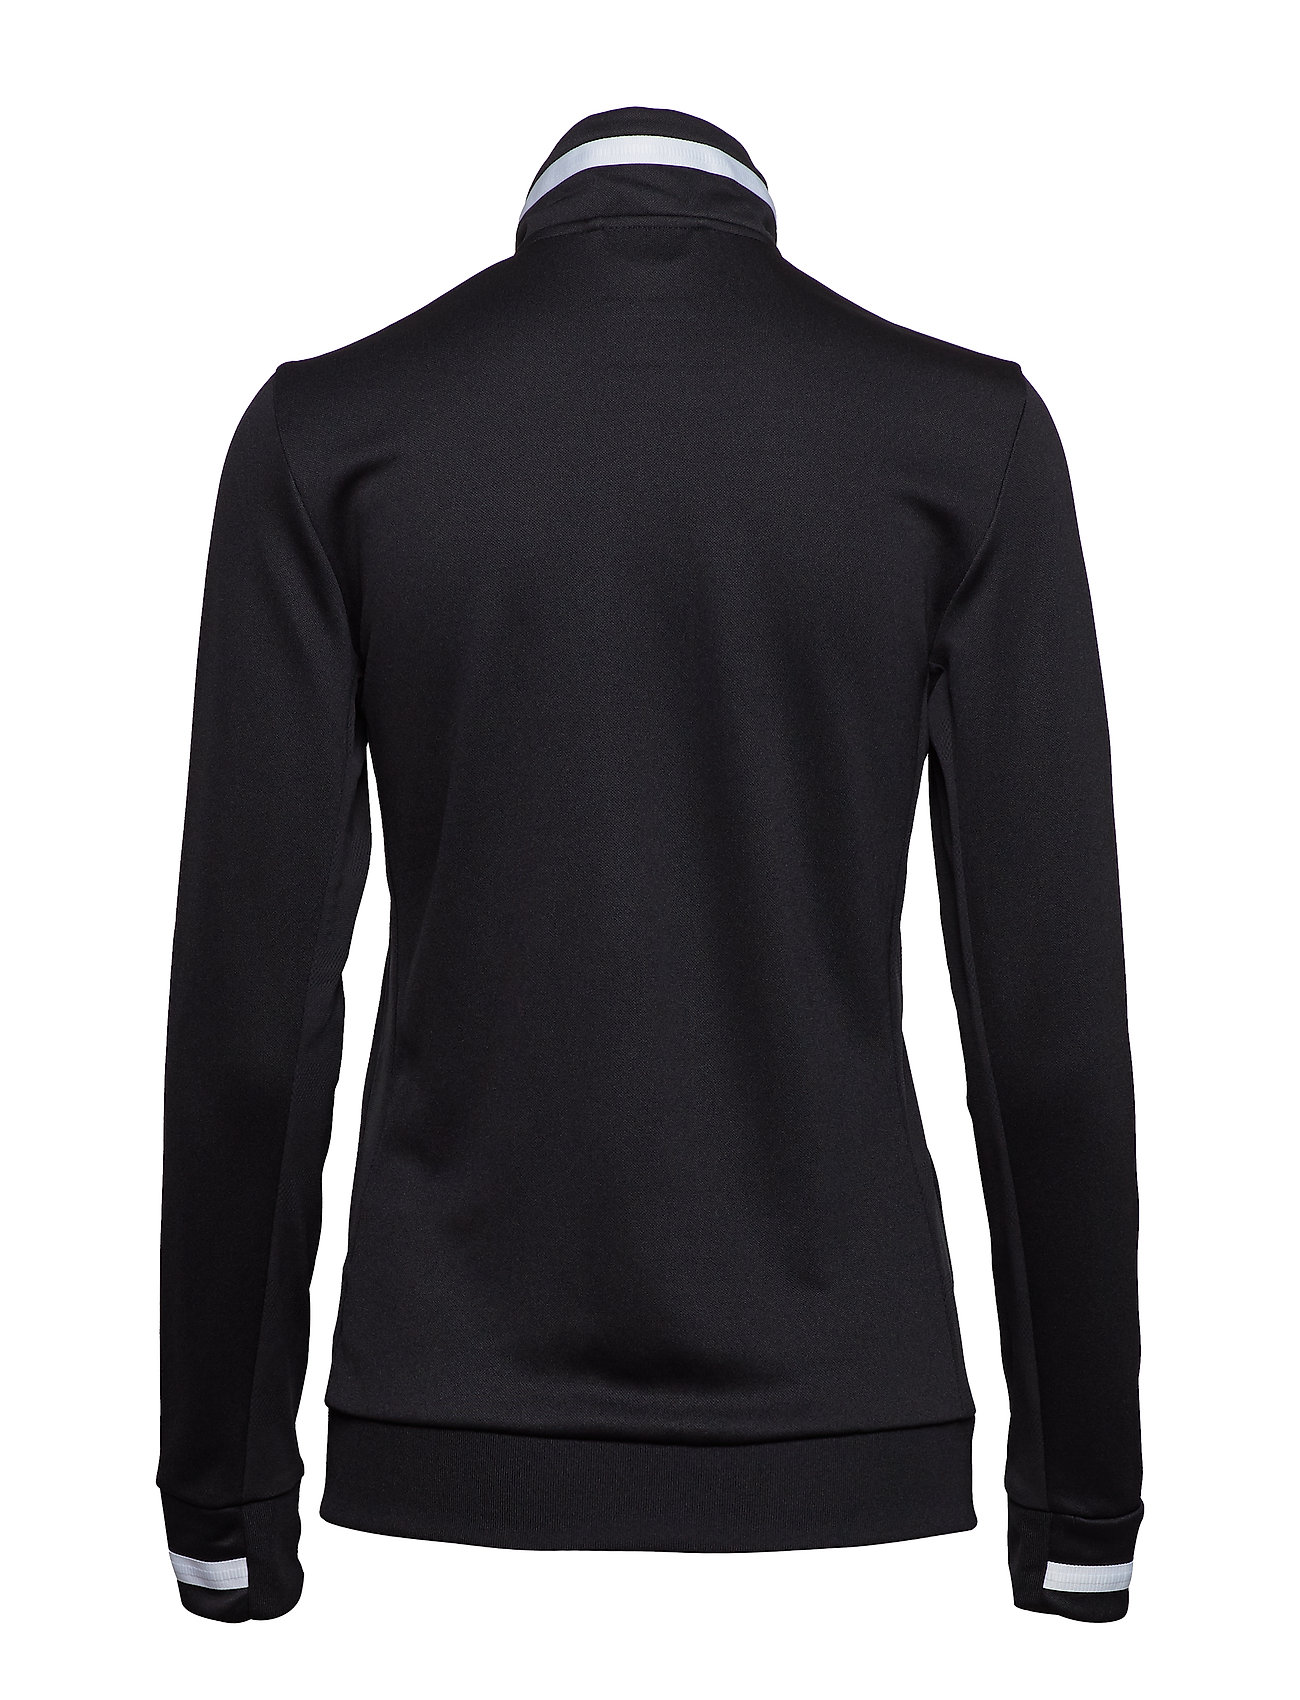 adidas Performance - Team 19 Track Jacket W - mid layer jackets - black/white - 1